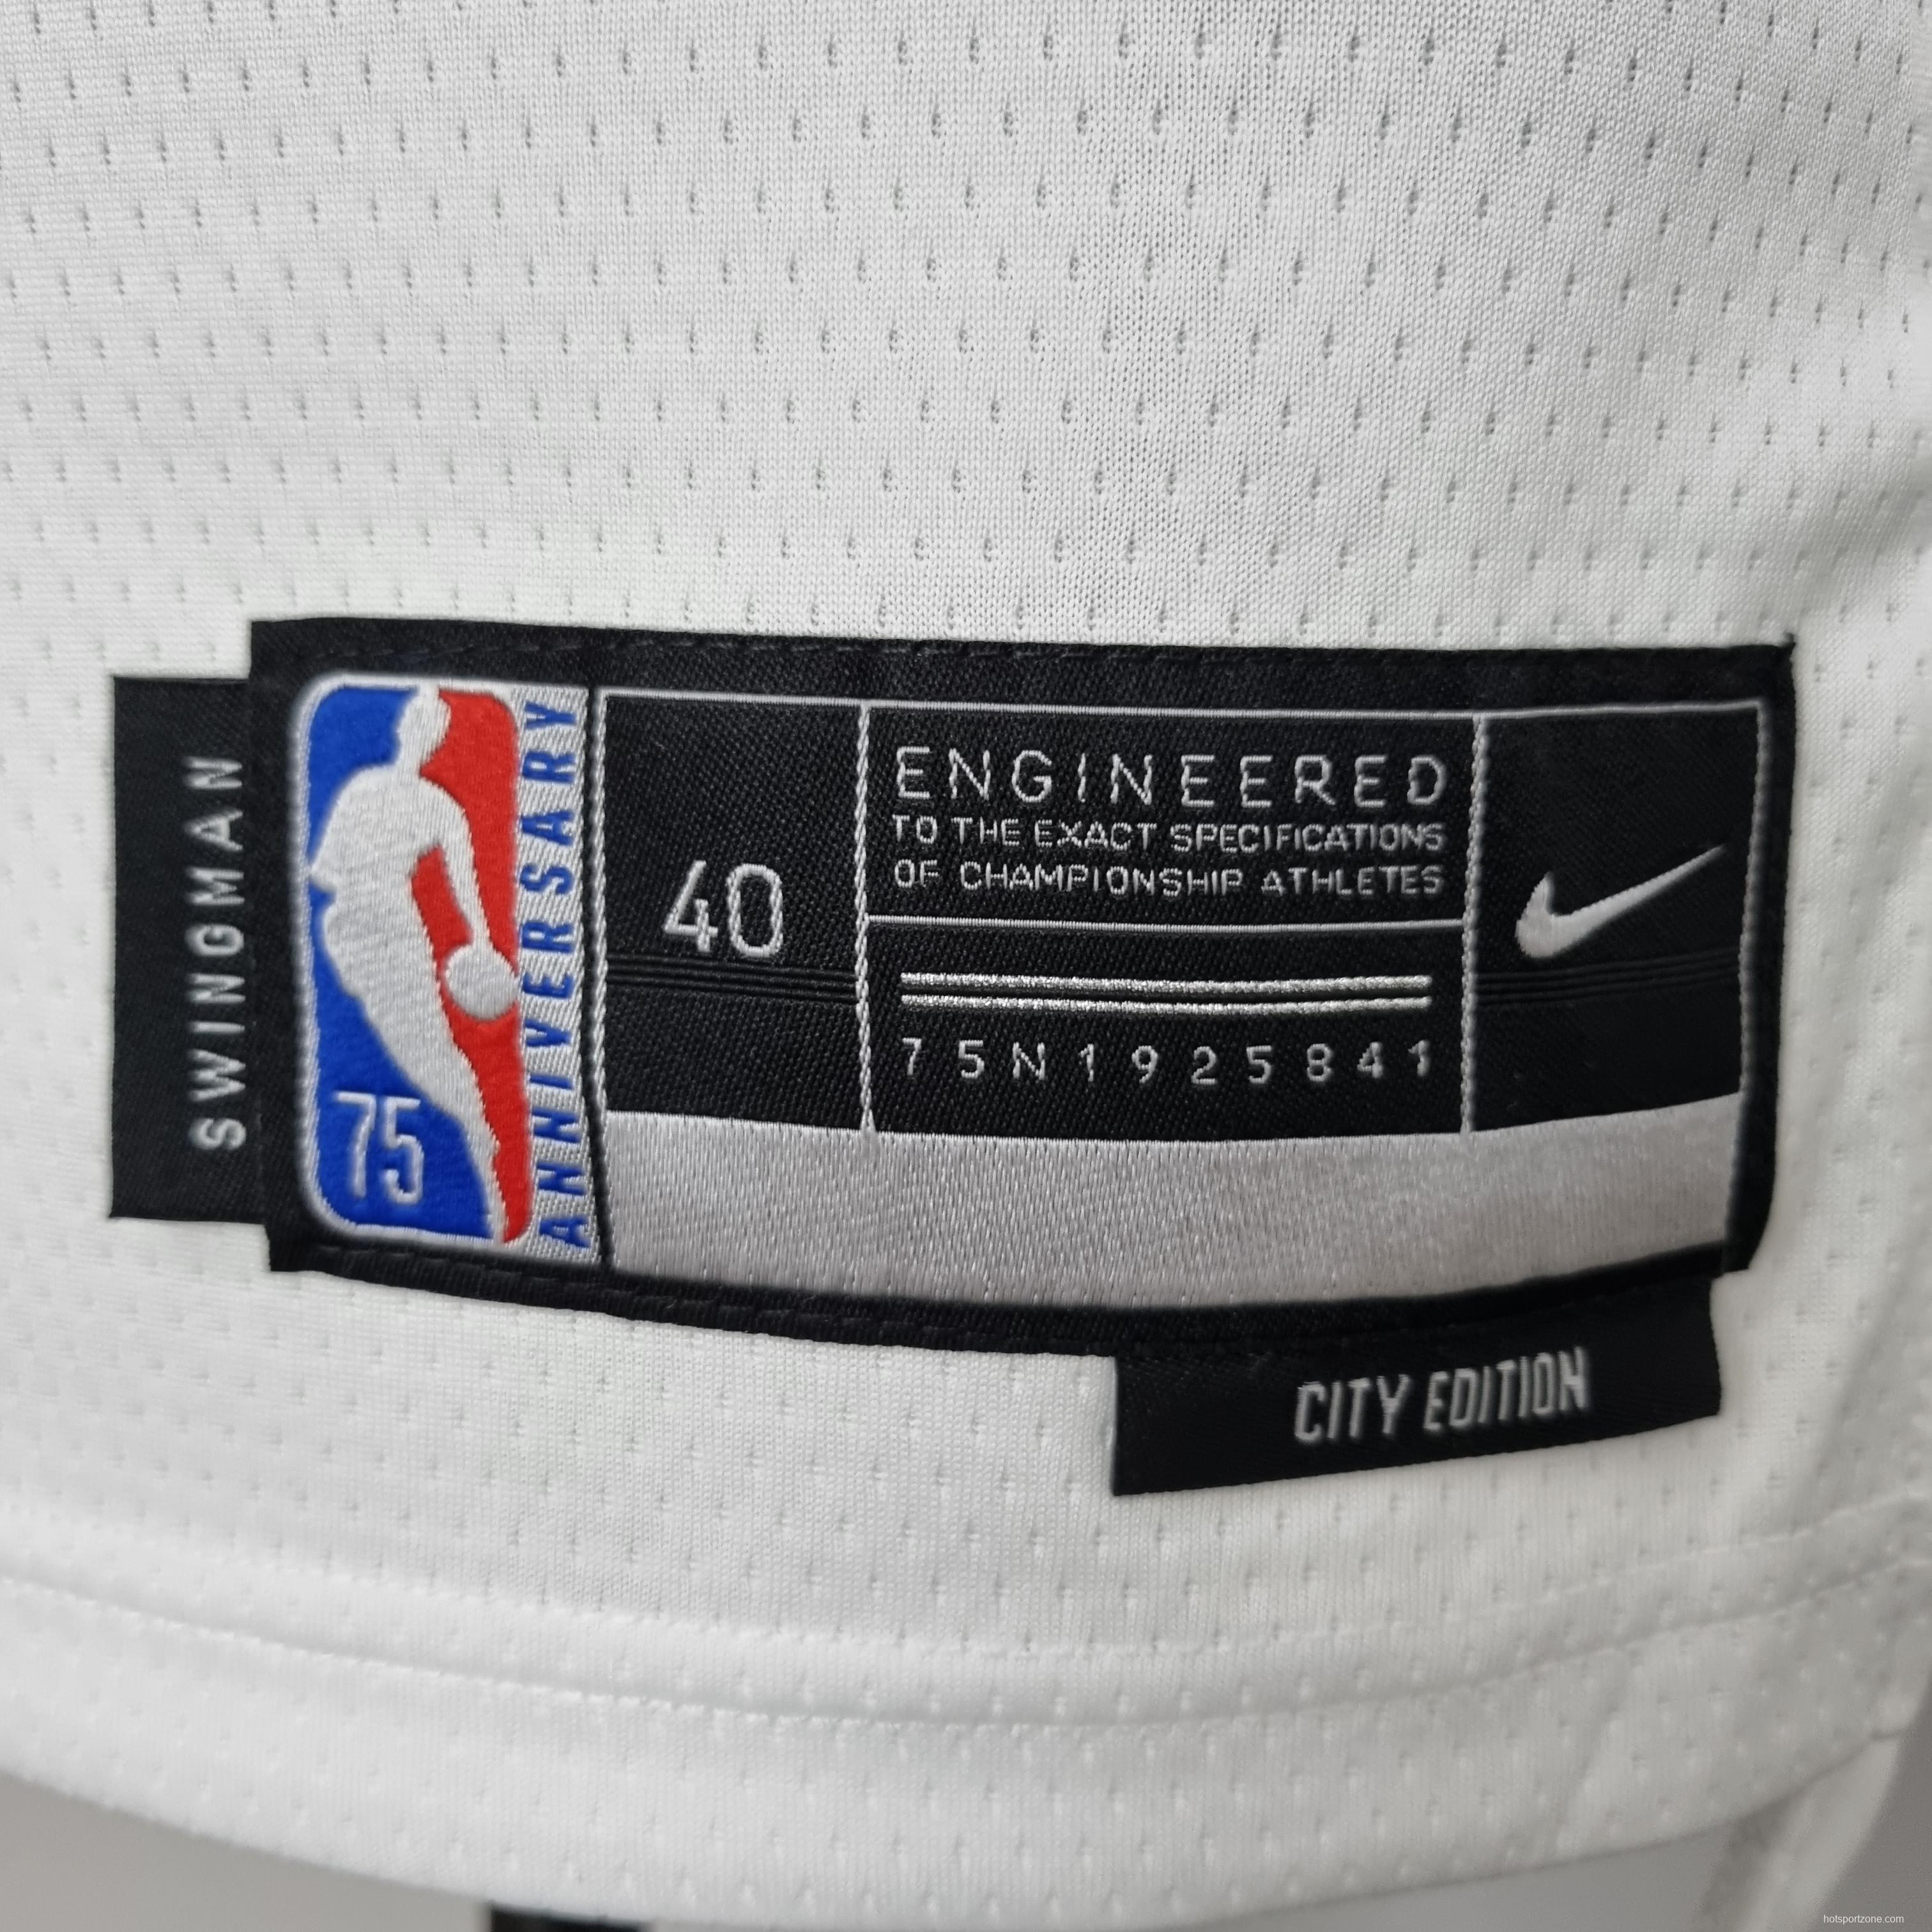 75th Anniversary Randle #30 New York Knicks White NBA Jersey